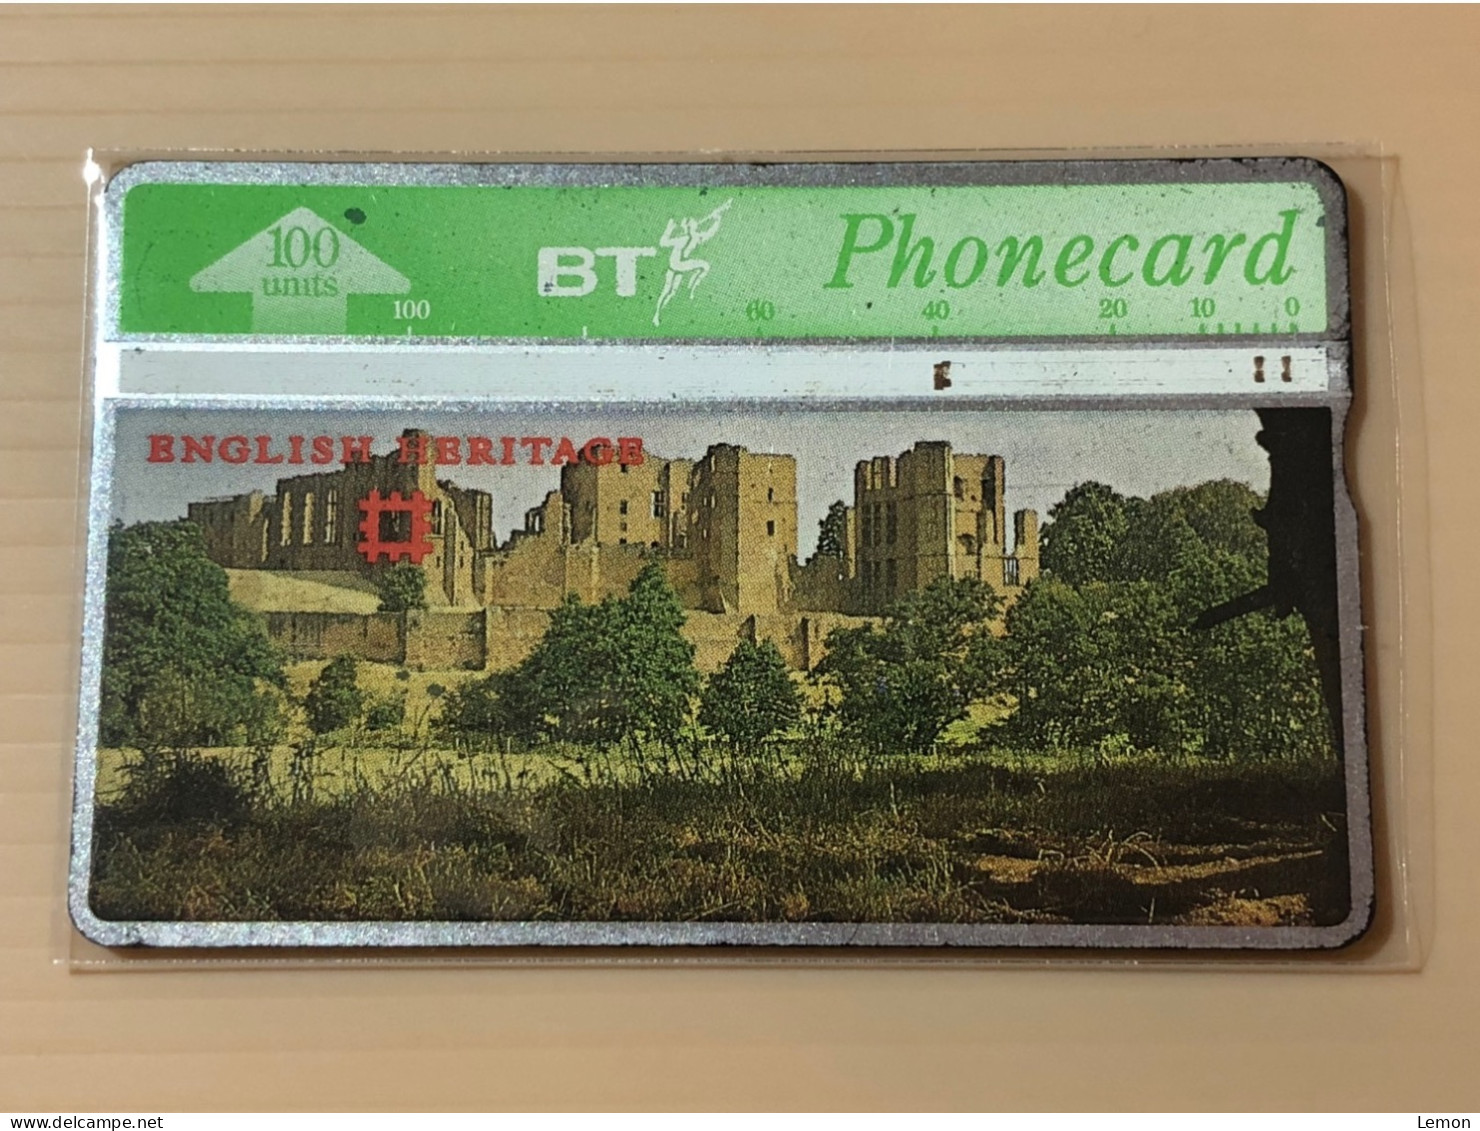 UK United Kingdom - British Telecom Phonecard - English Heritages - Set Of 1 Used Card - Collections